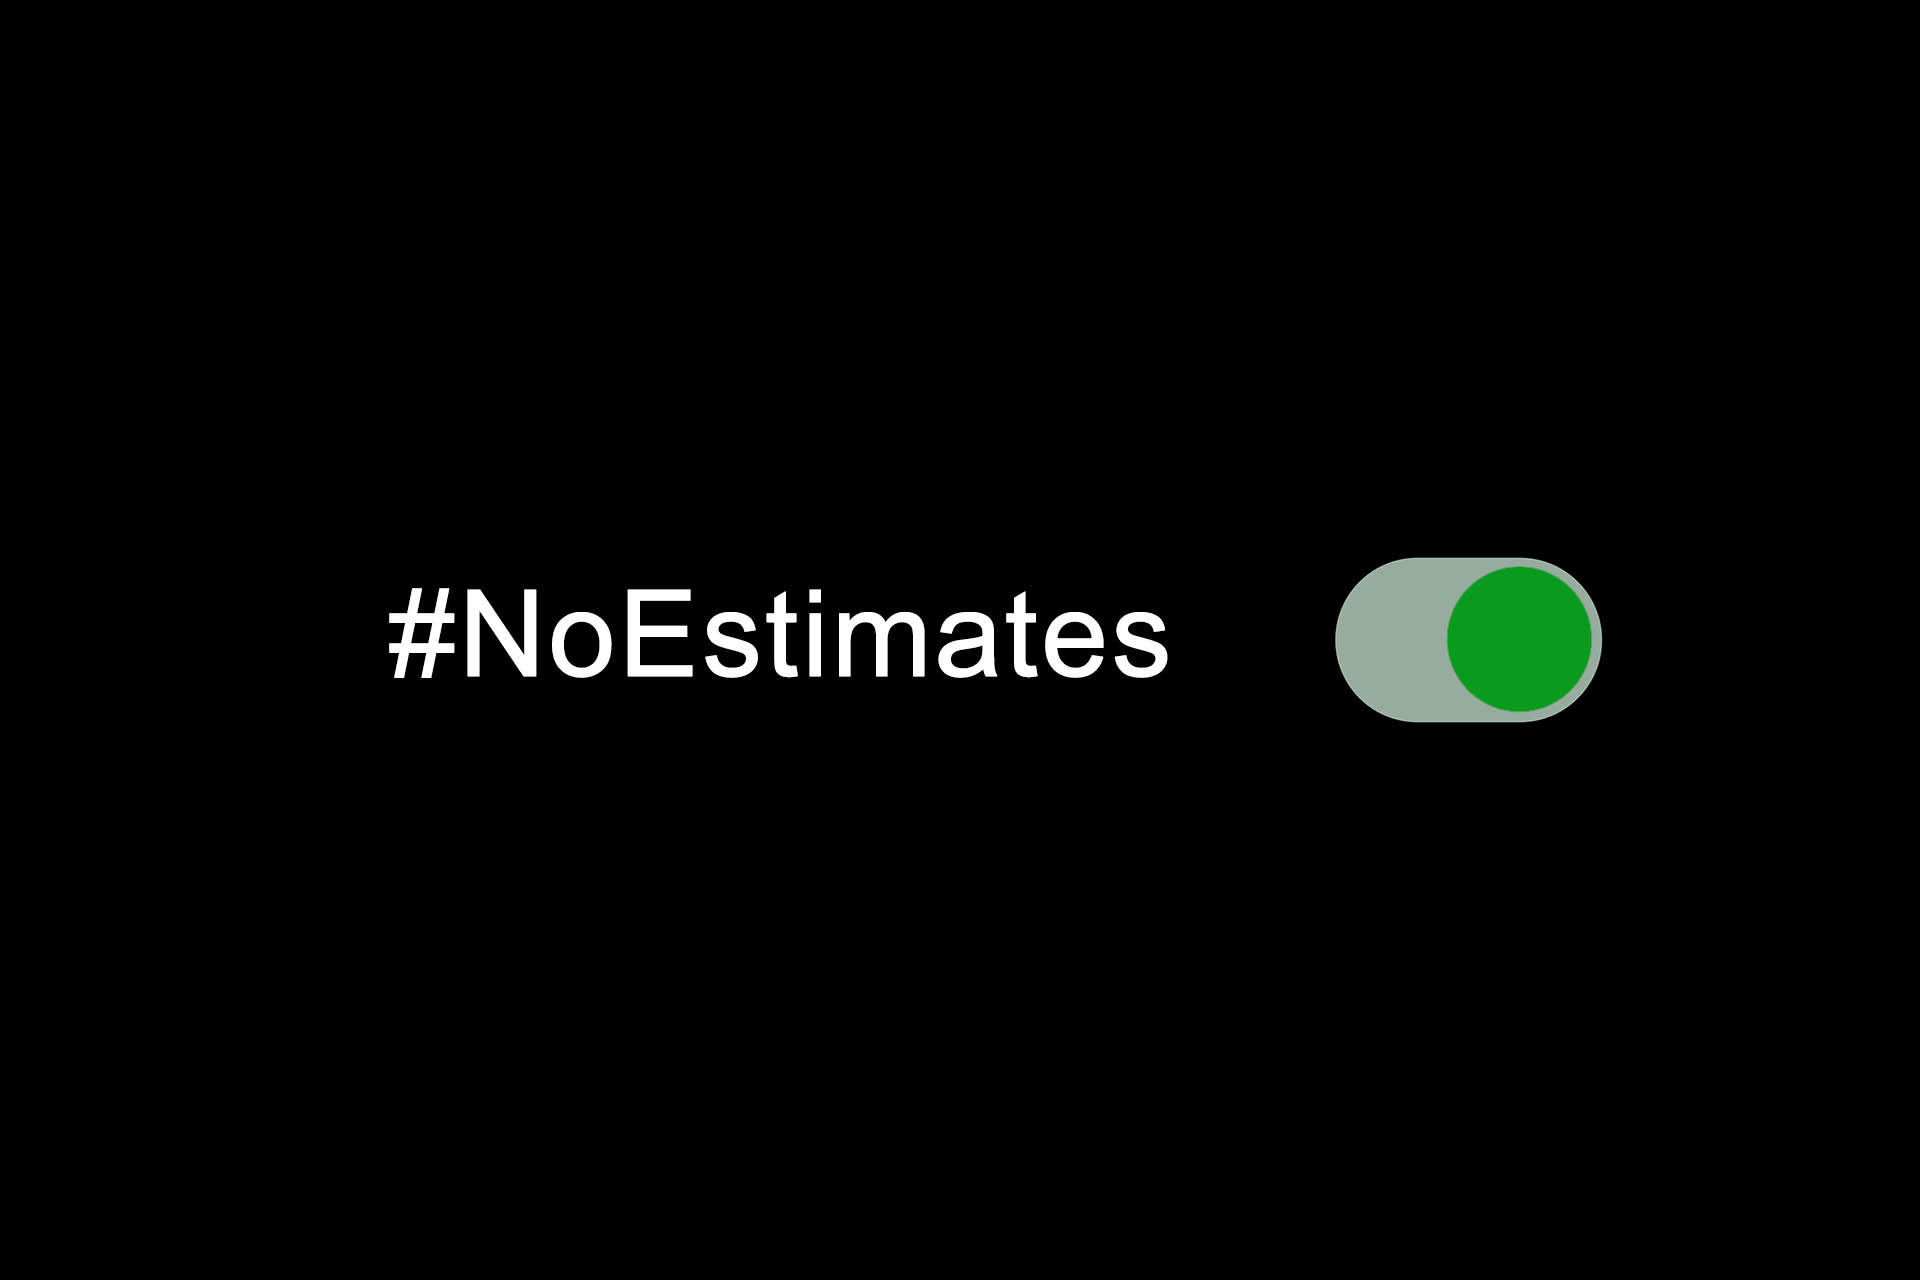 t2informatik Blog: The idea of #NoEstimates